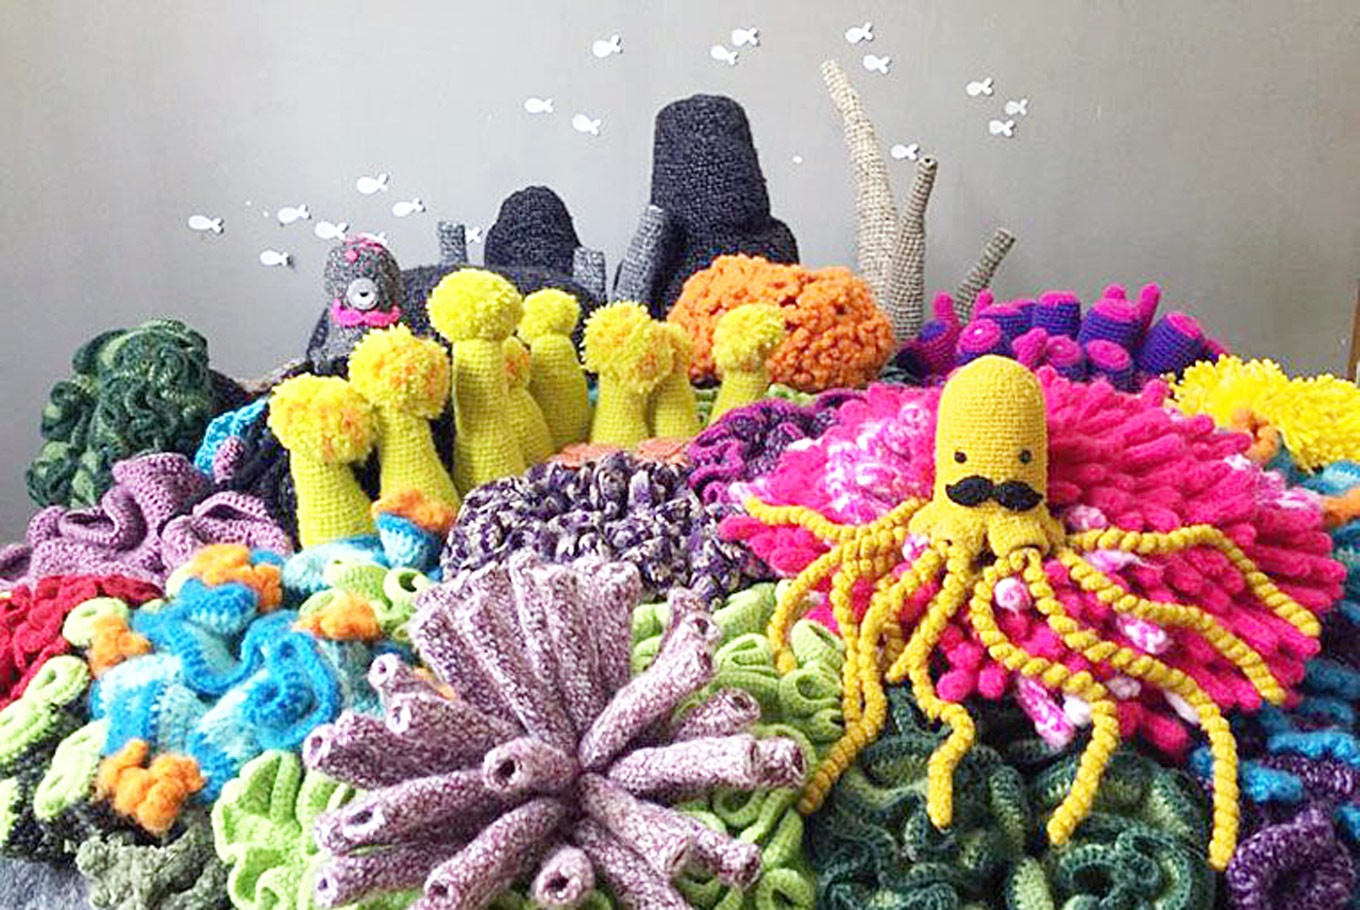 Mulyana Blowing Fresh Wind With Crochet For Artjog Art Culture The Jakarta Post